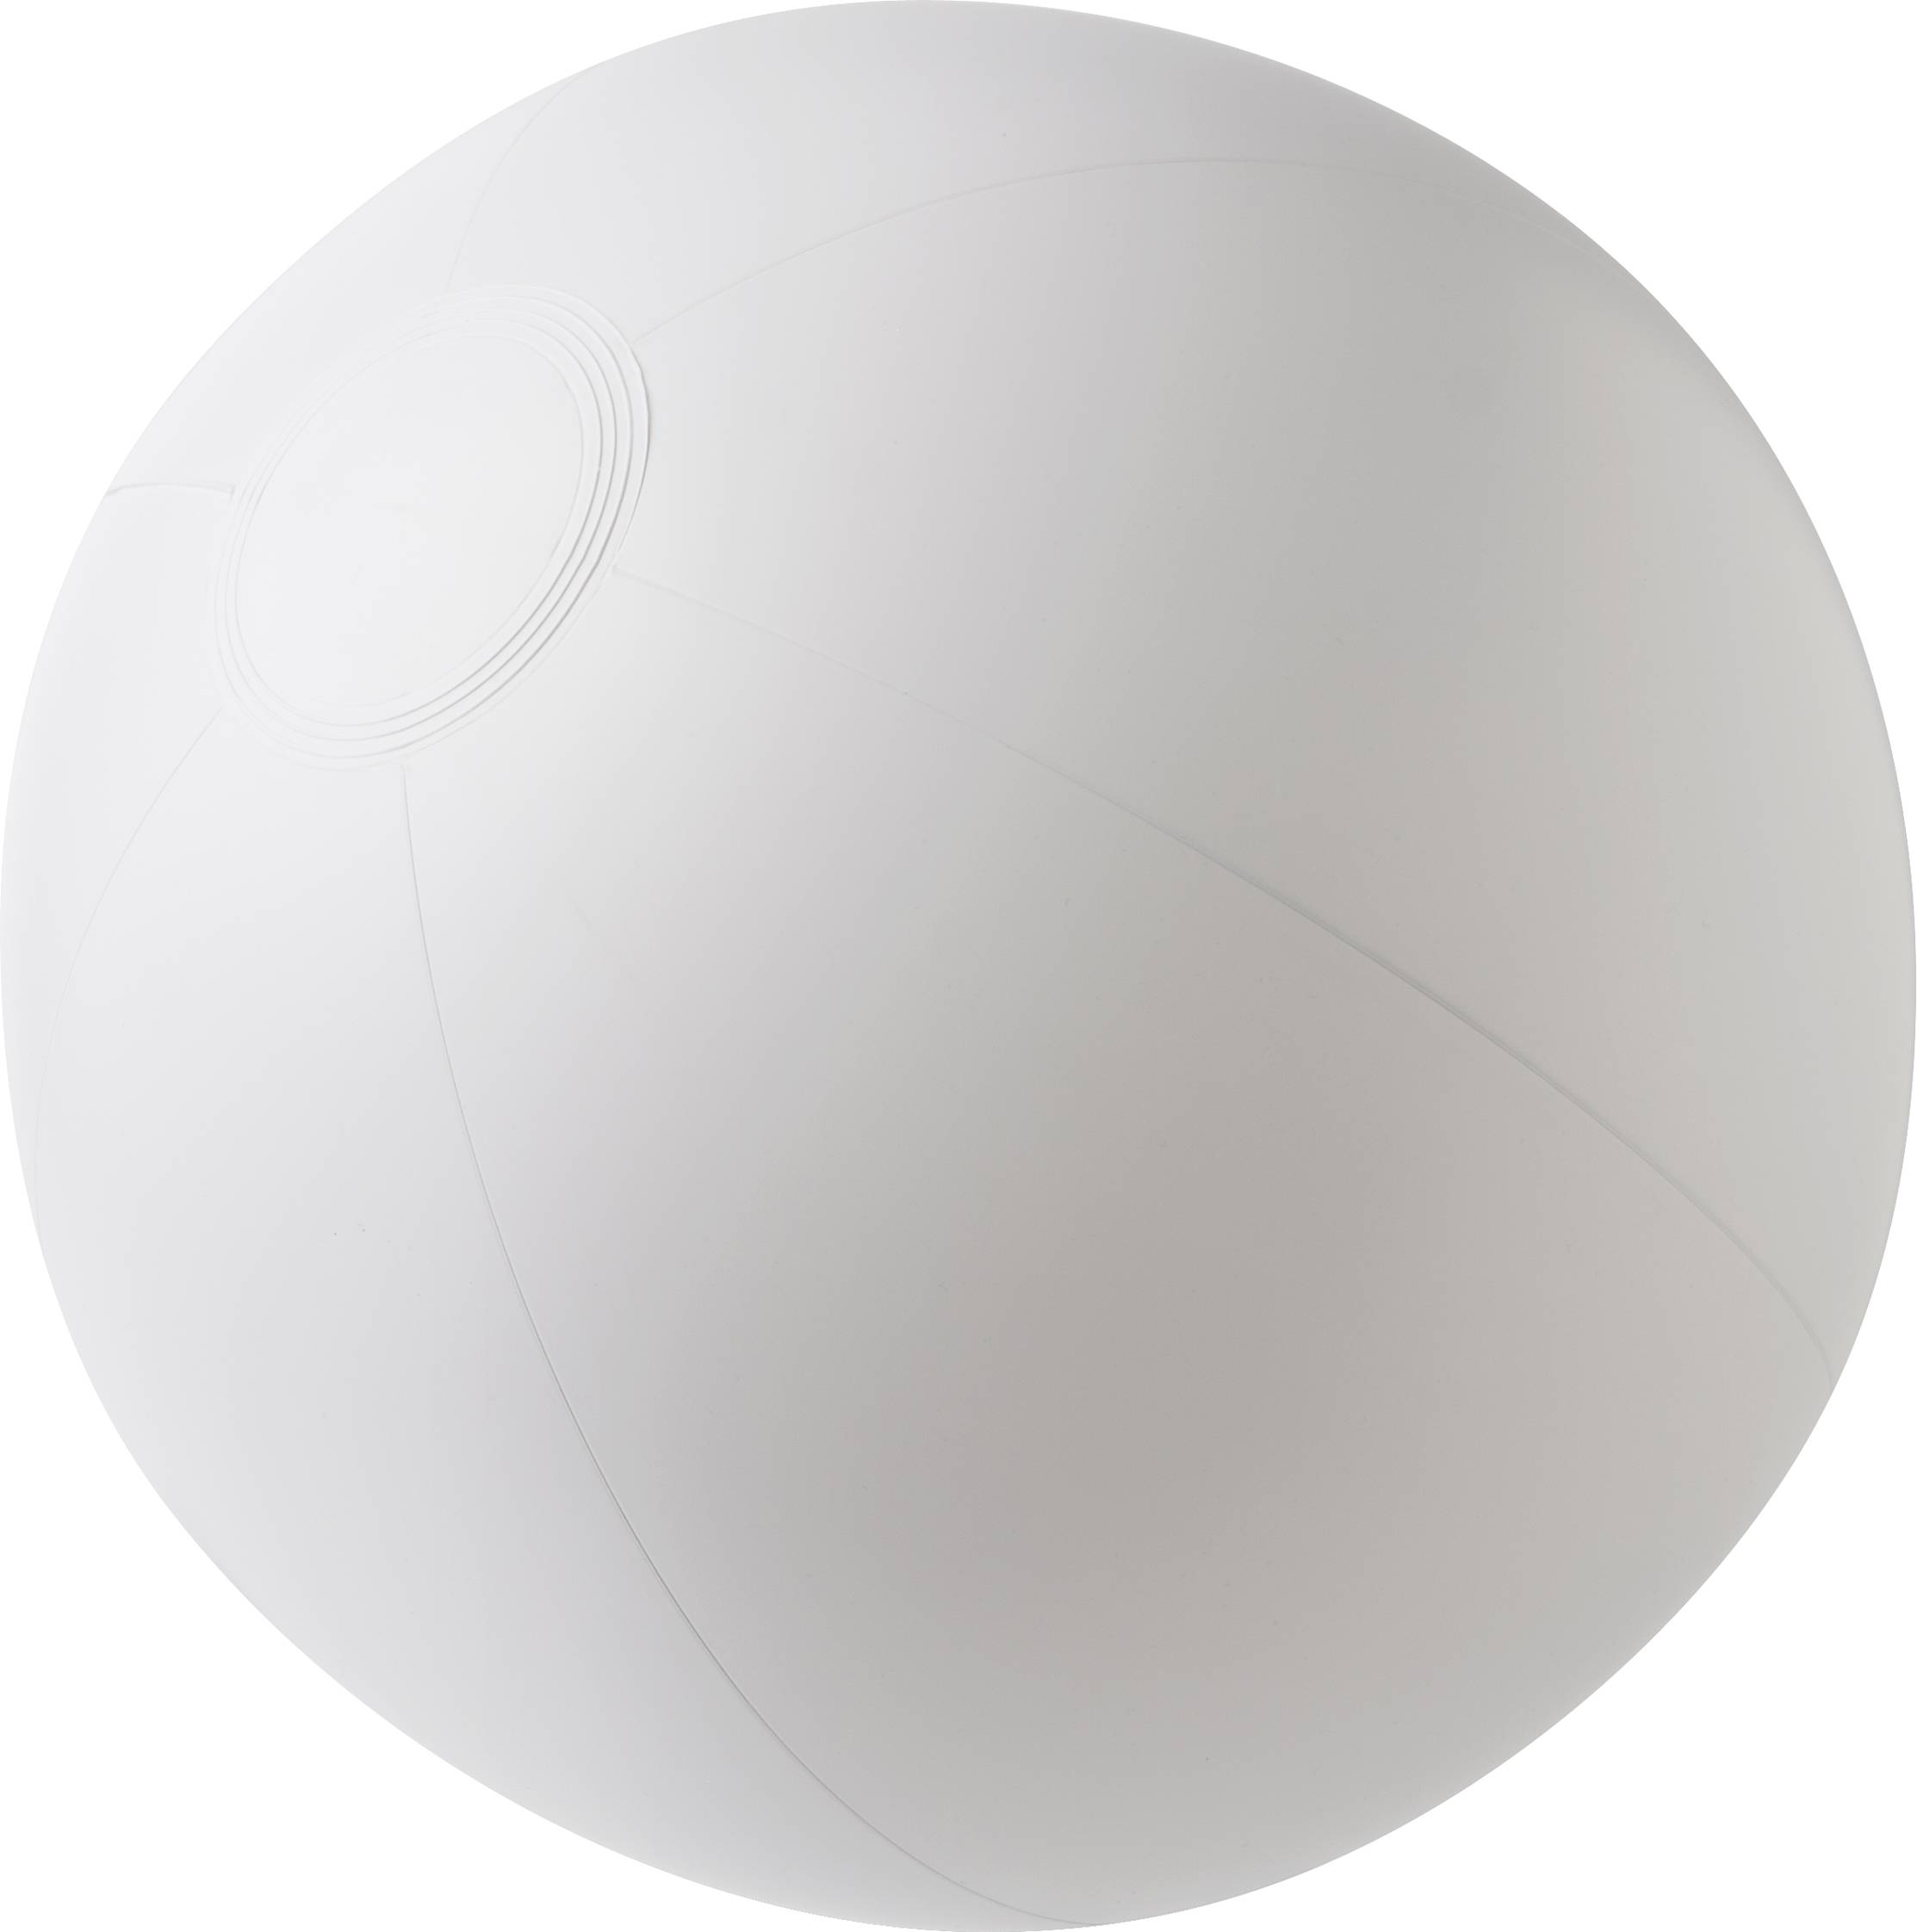 PVC inflatable beach ball., White (Inflatable beach equipment ...